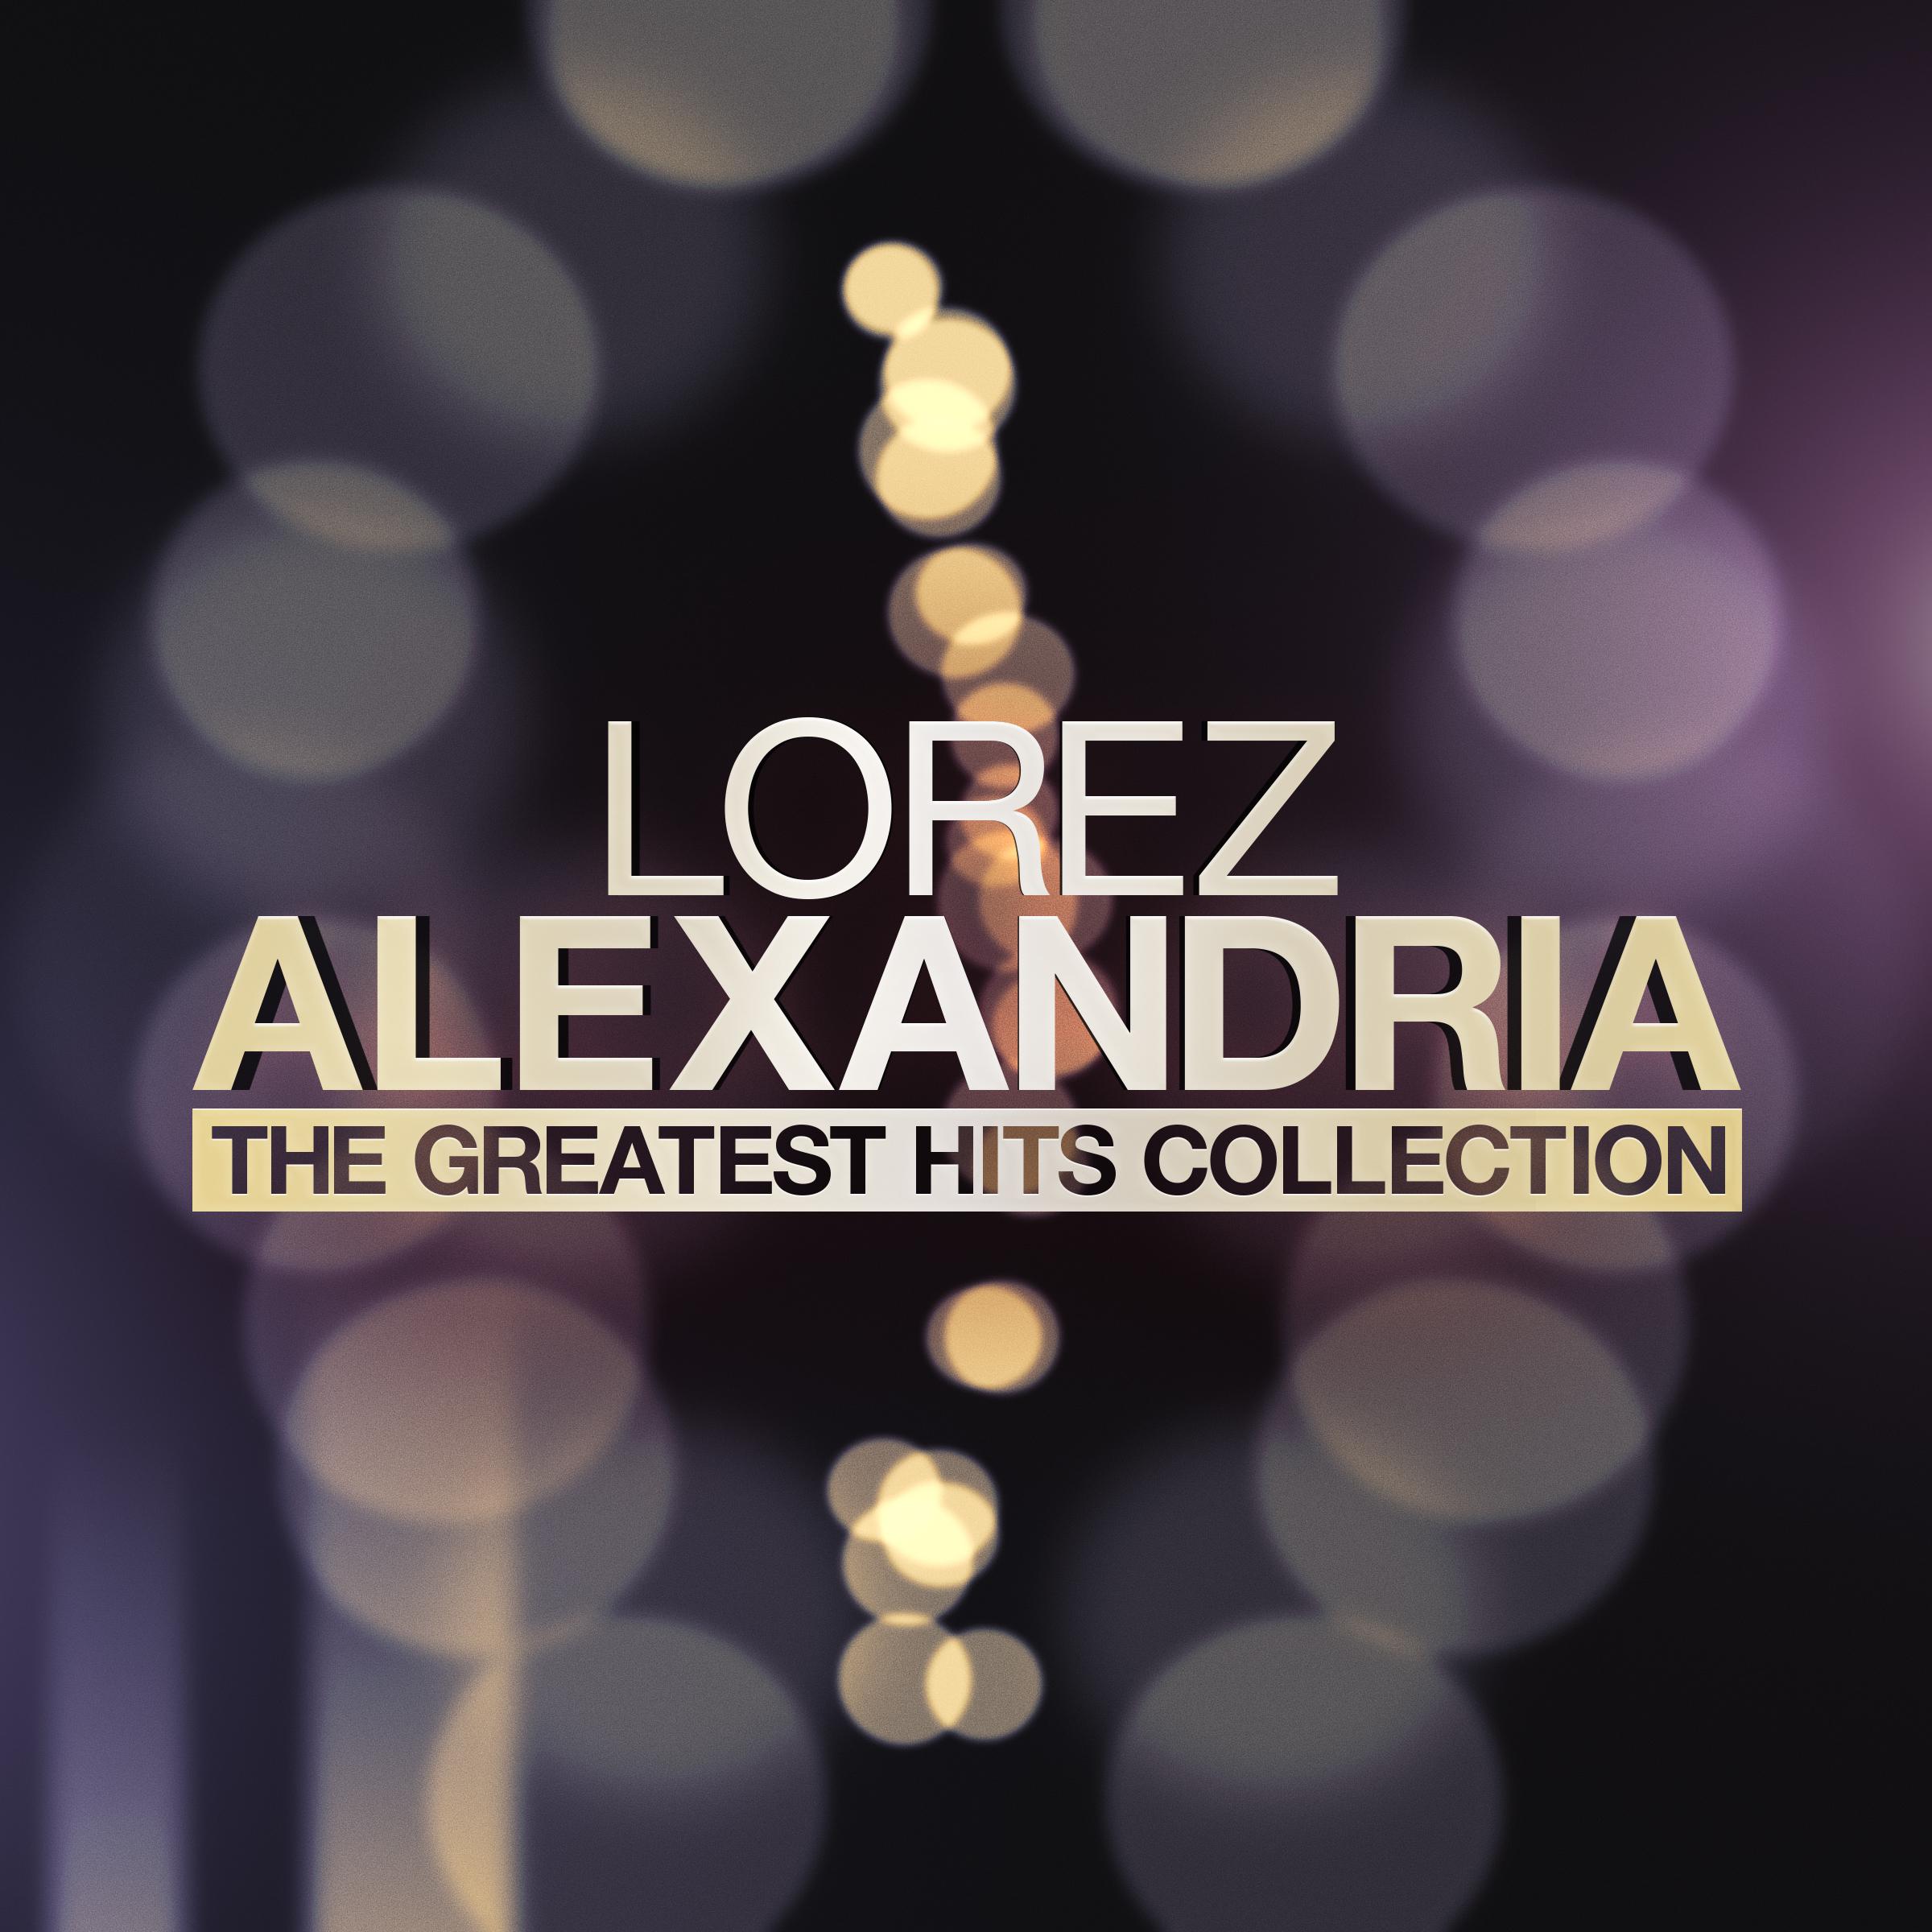 Lorez Alexandria - The Greatest Hits Collection